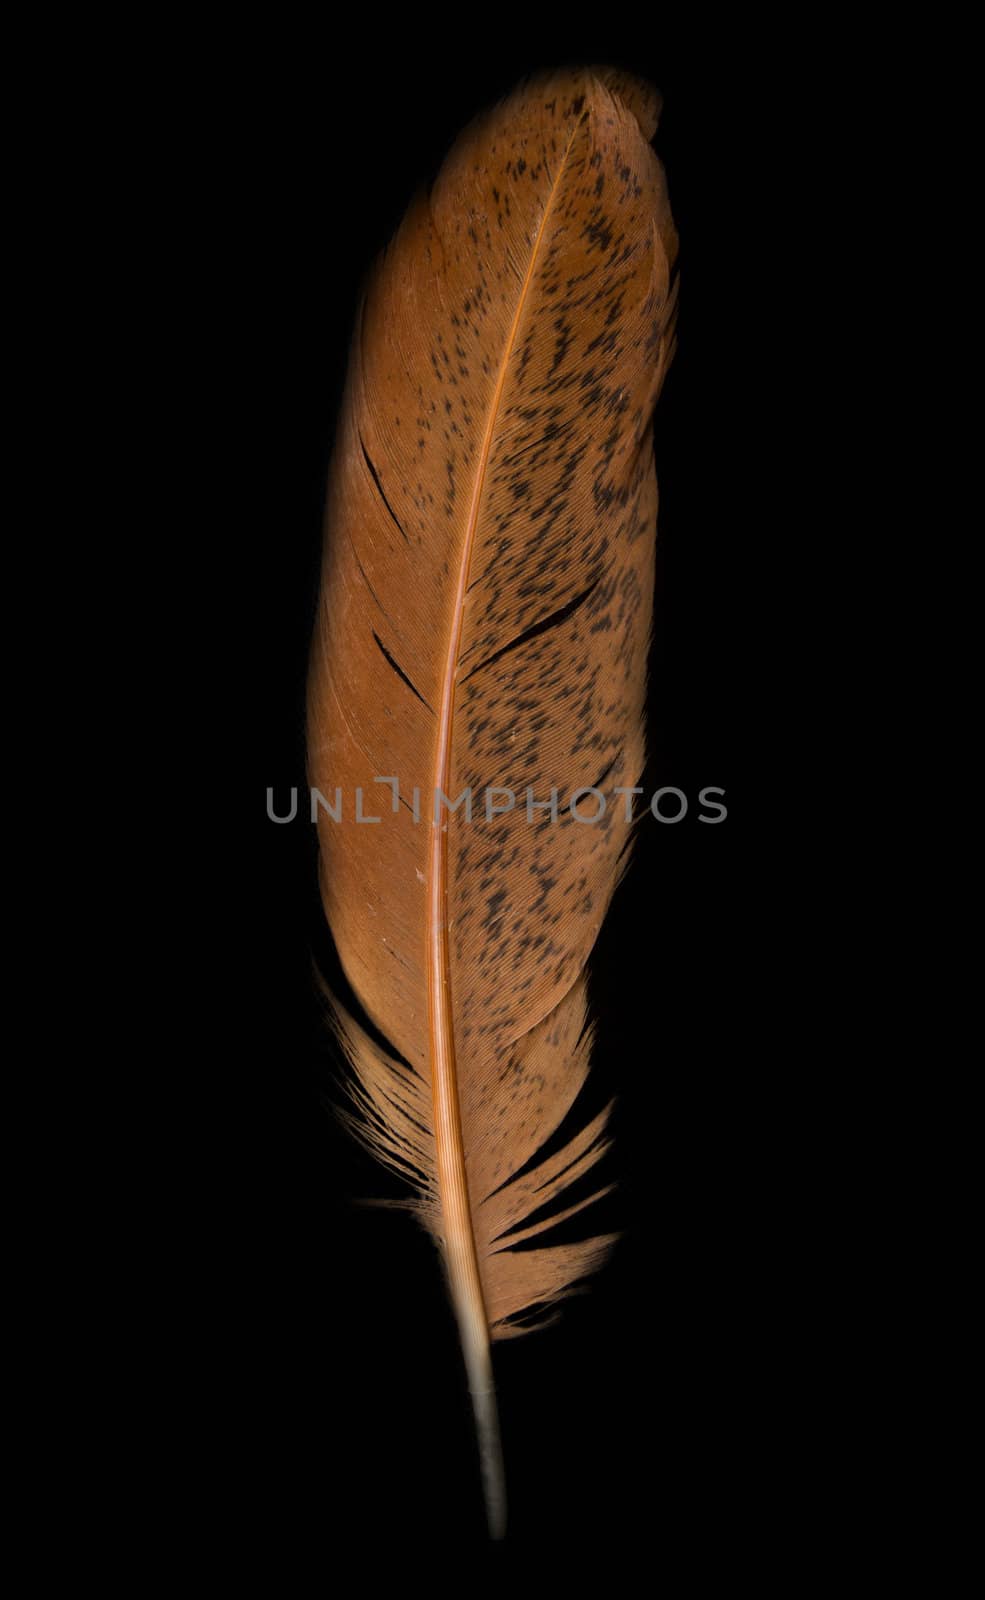 Mallard duck feather on black background - good for use as desig by schankz